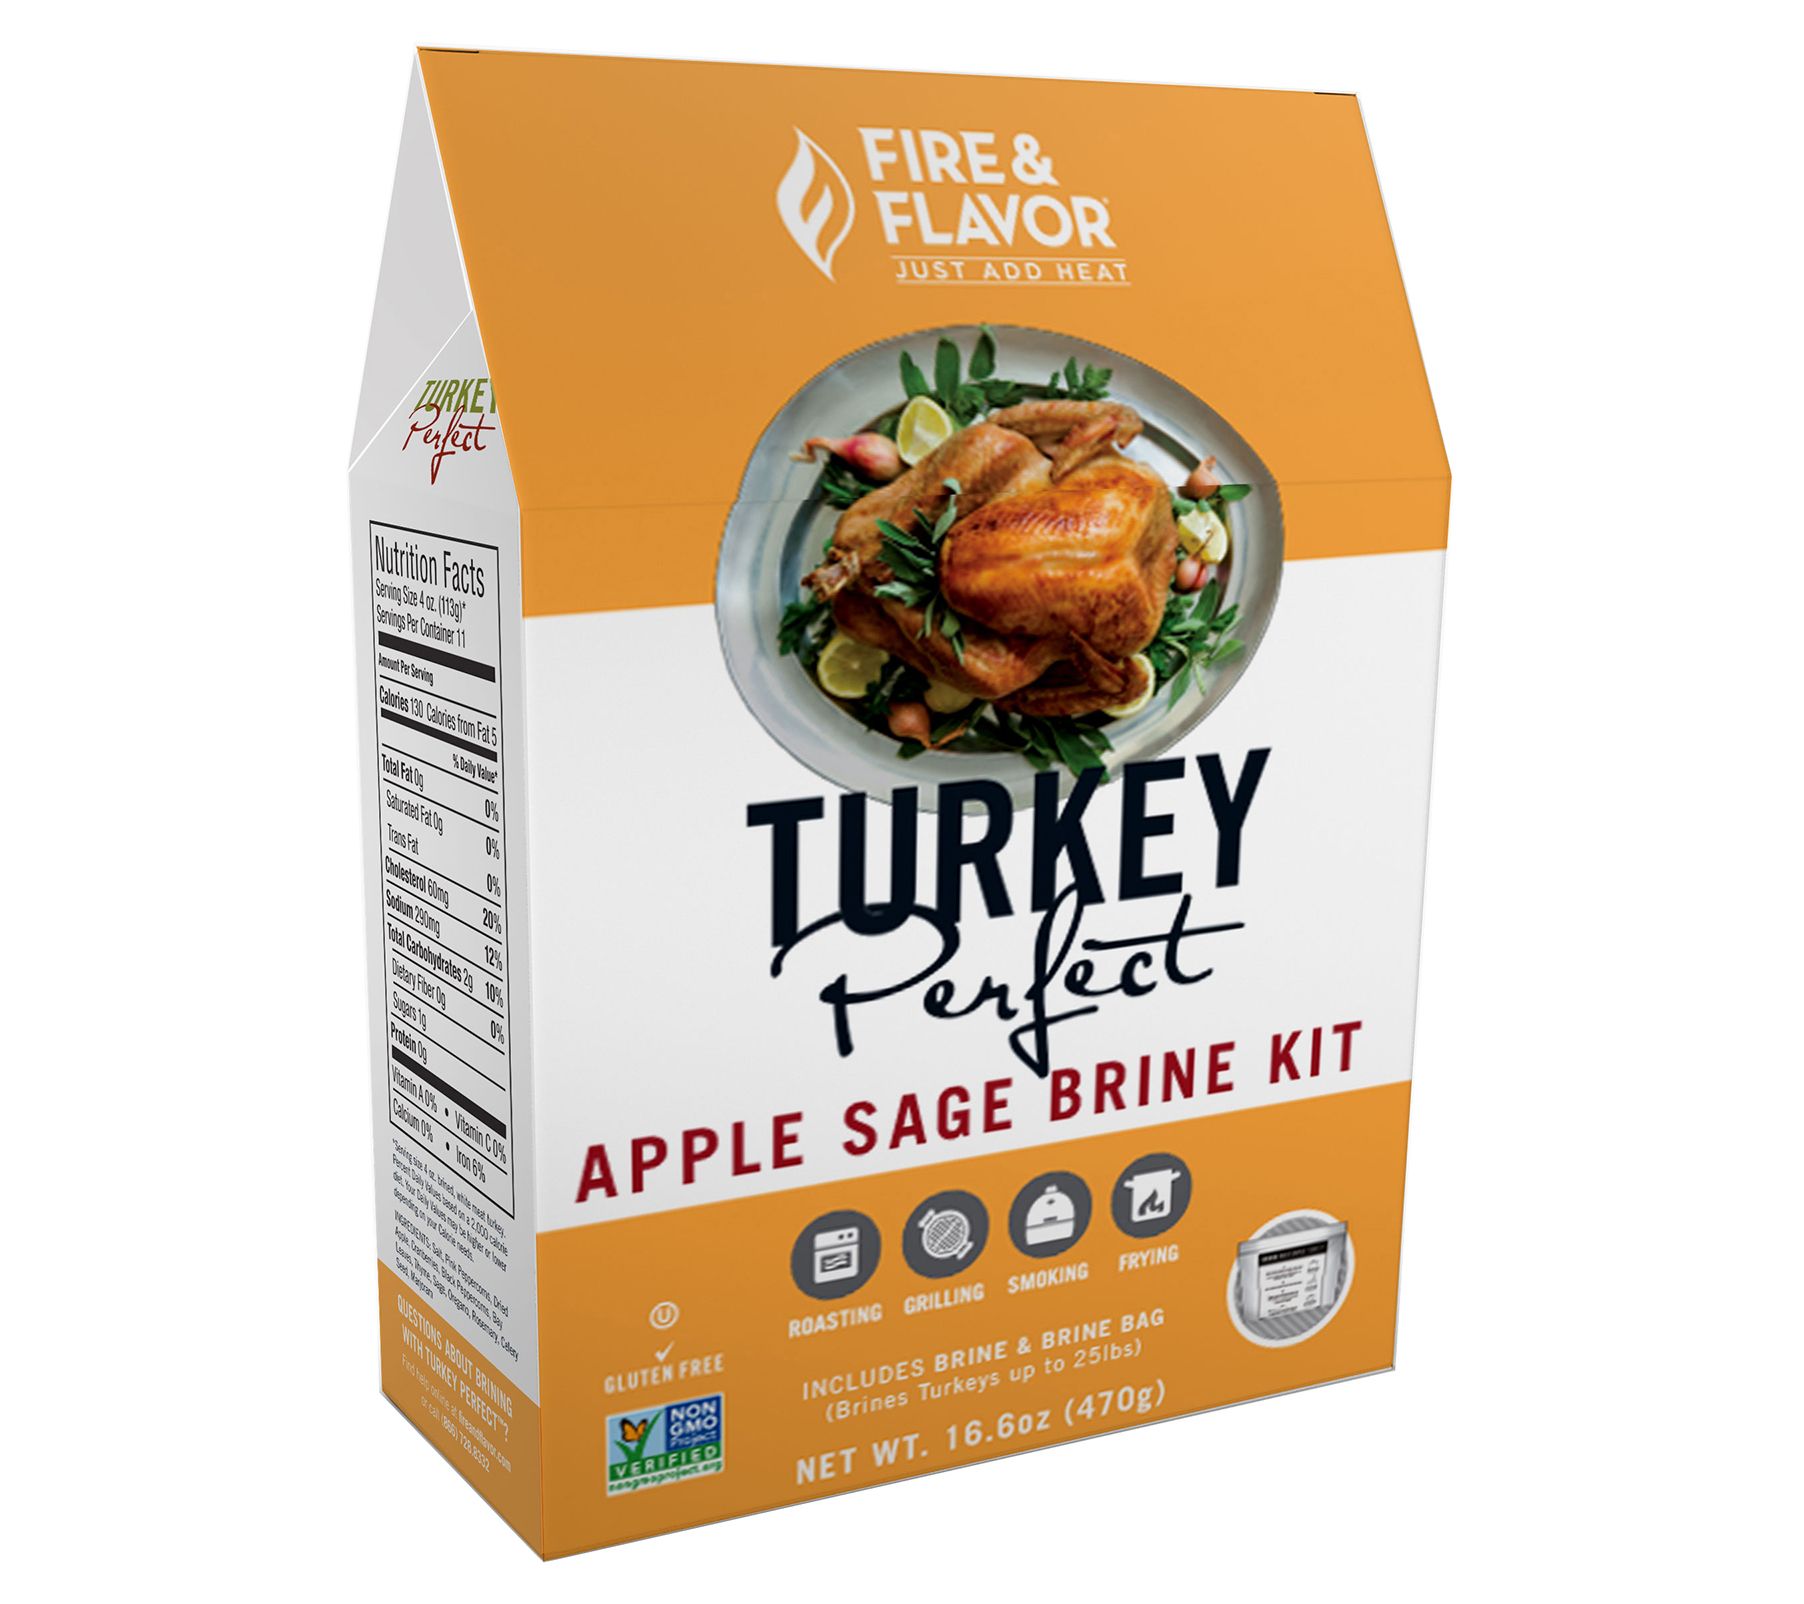 Fire & Flavor Turkey Perfect Herb Brine Kit - 12 oz